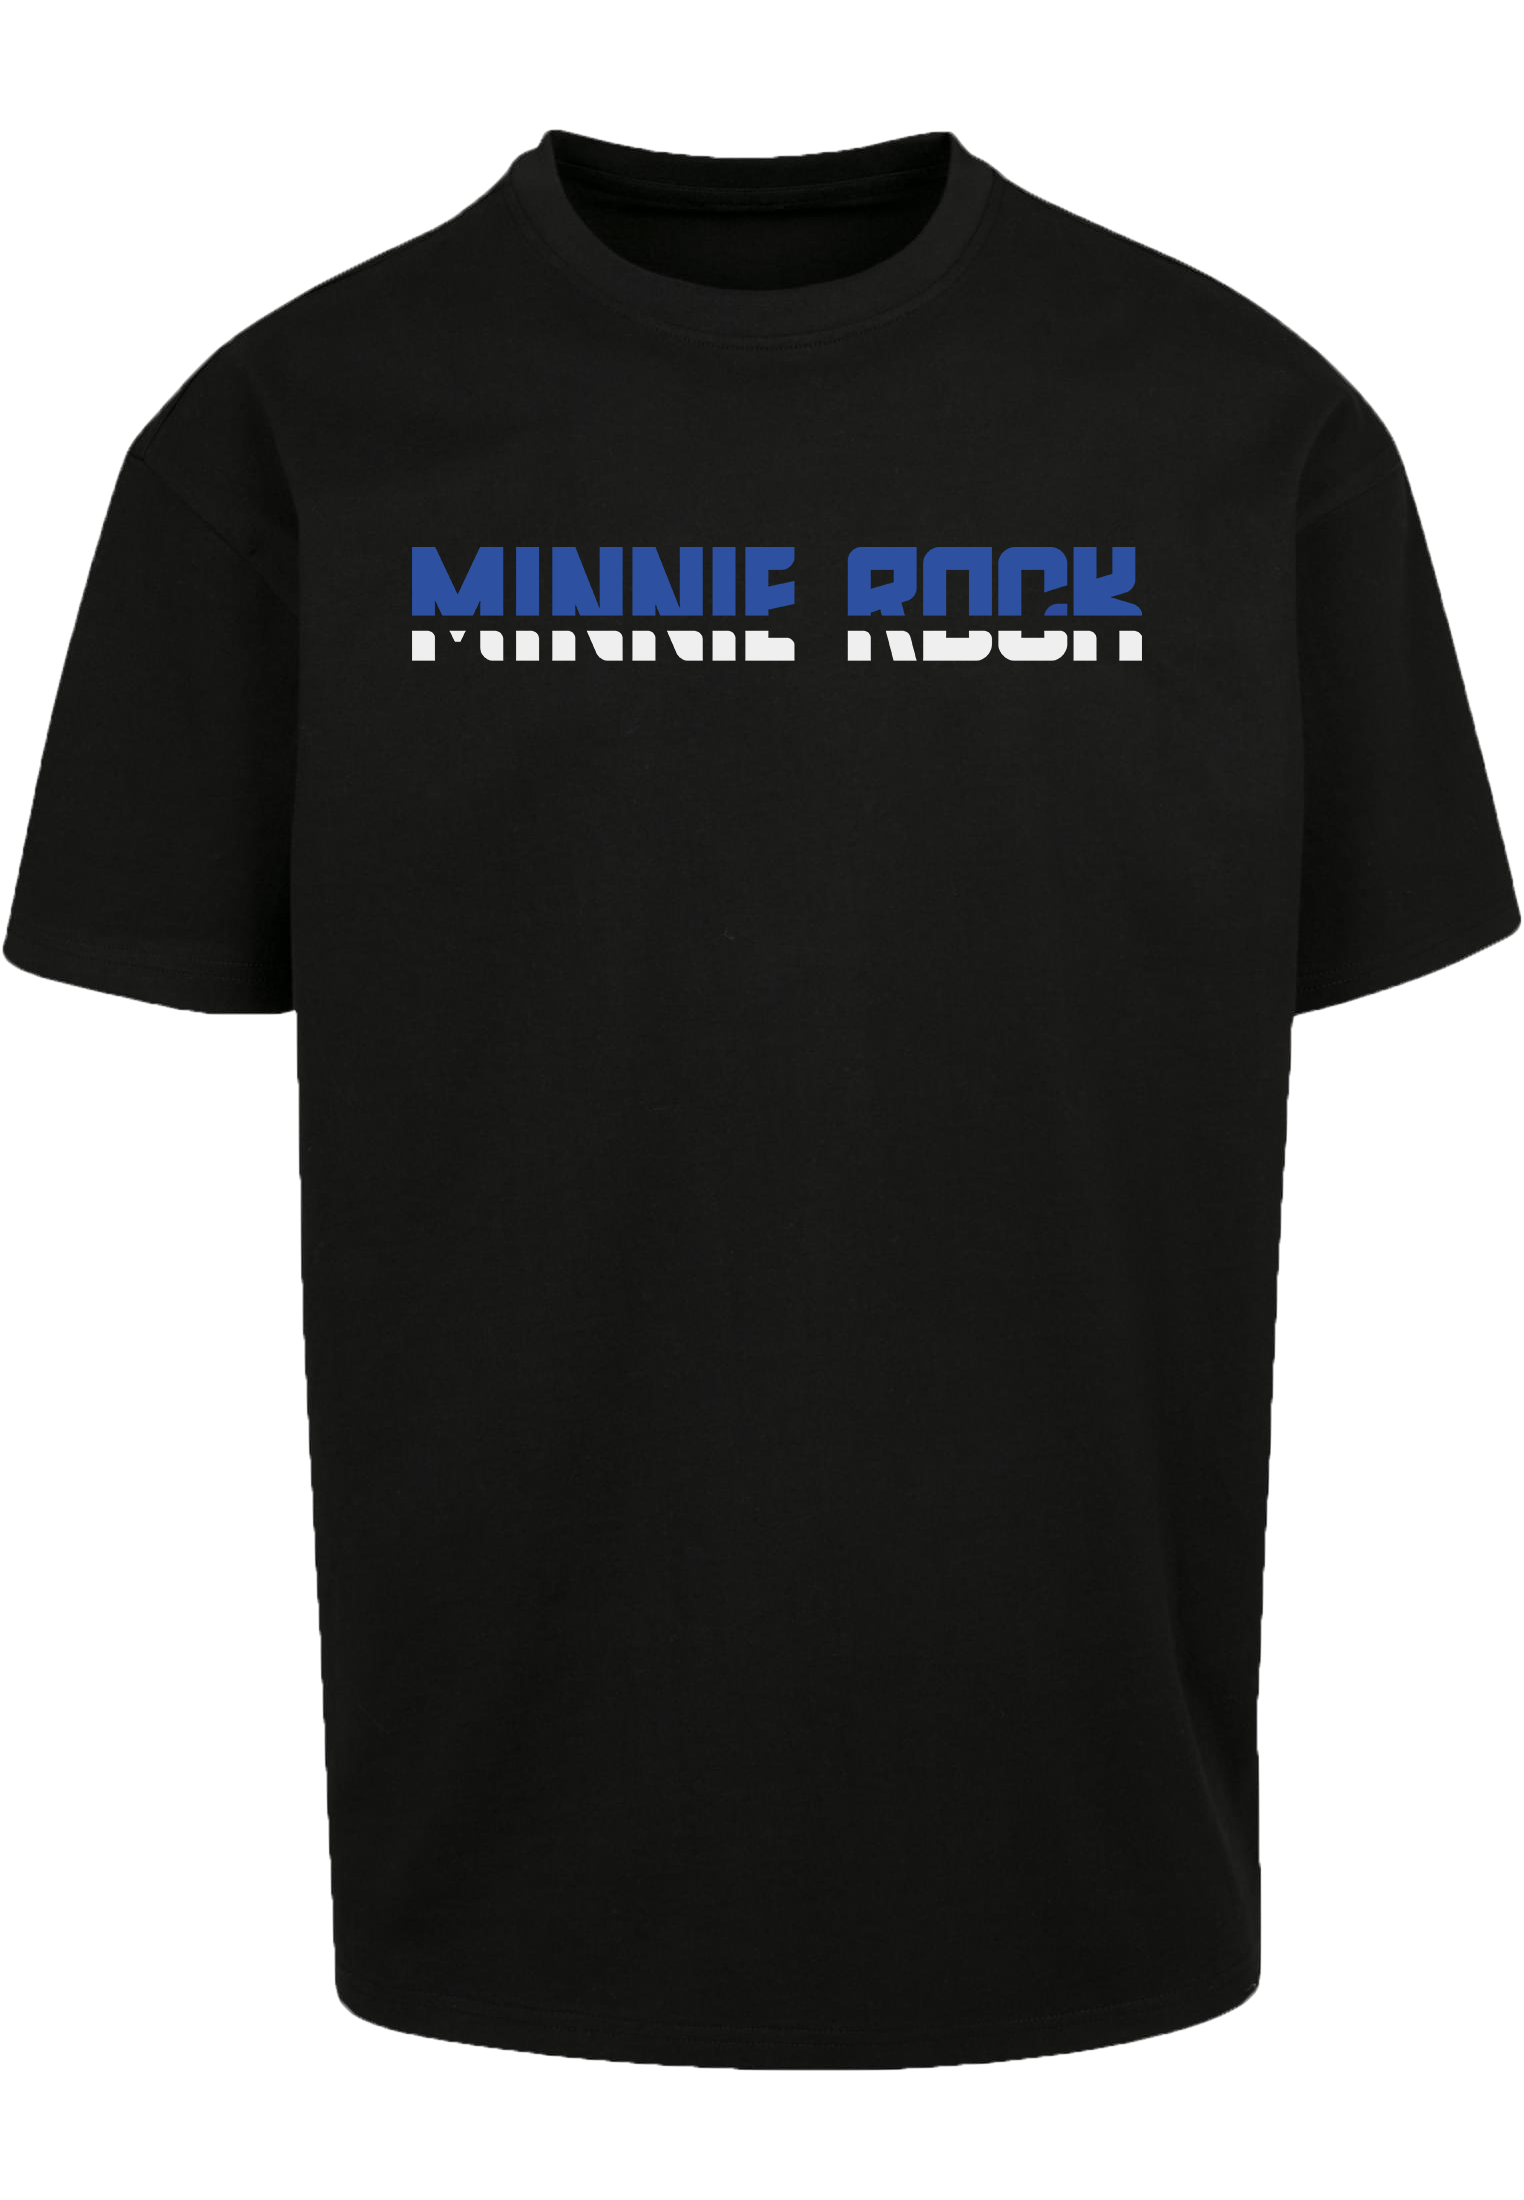 minnie rock - Schriftzug Unisex Oversized T-Shirt [schwarz]